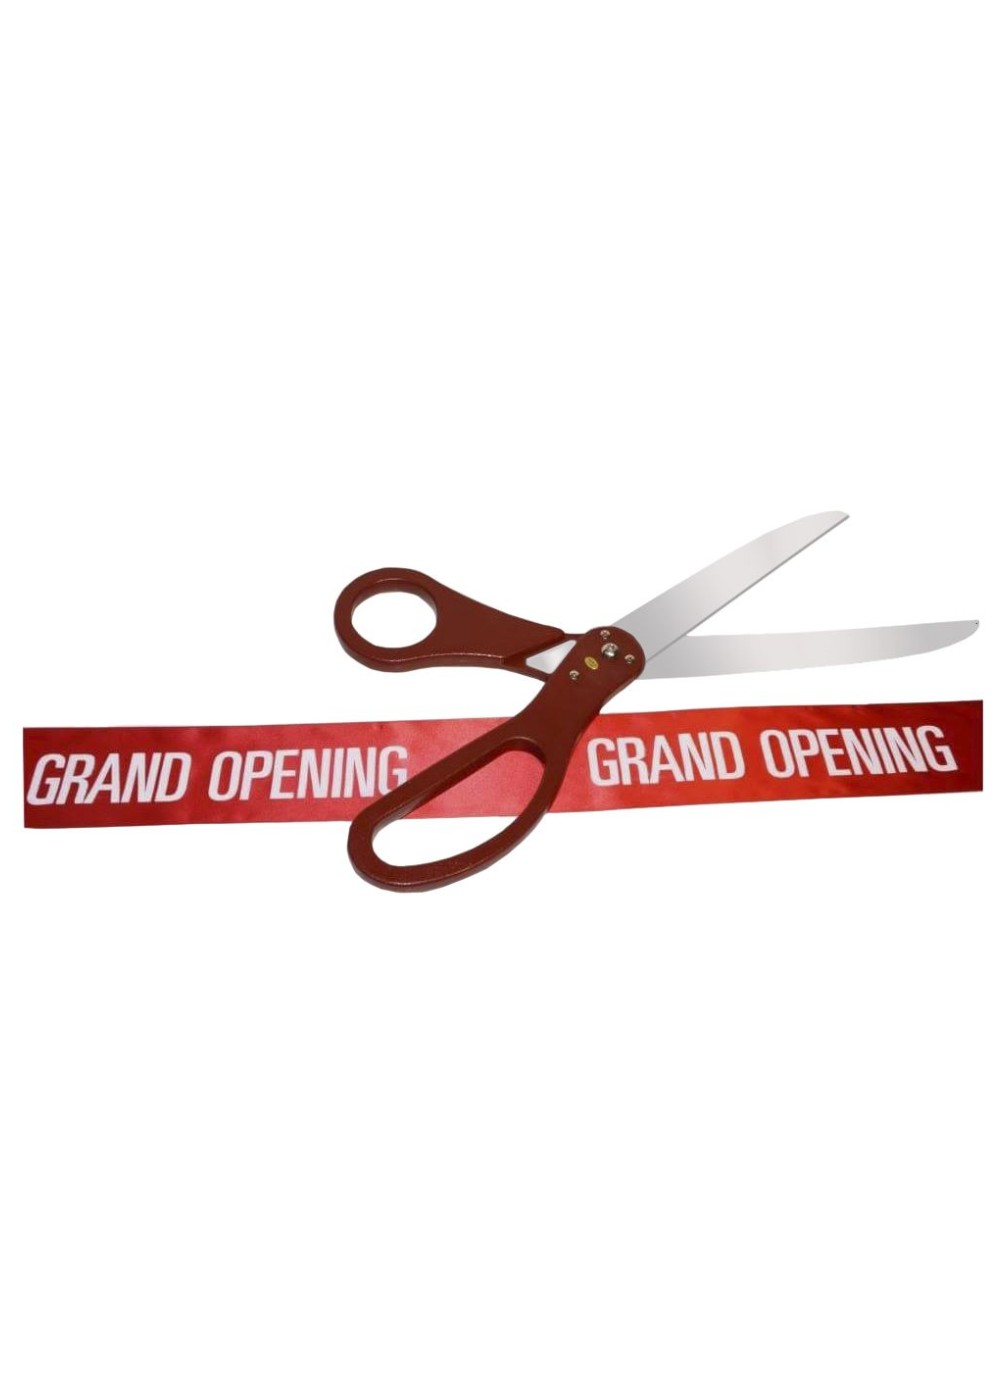  Grand Opening Scissors